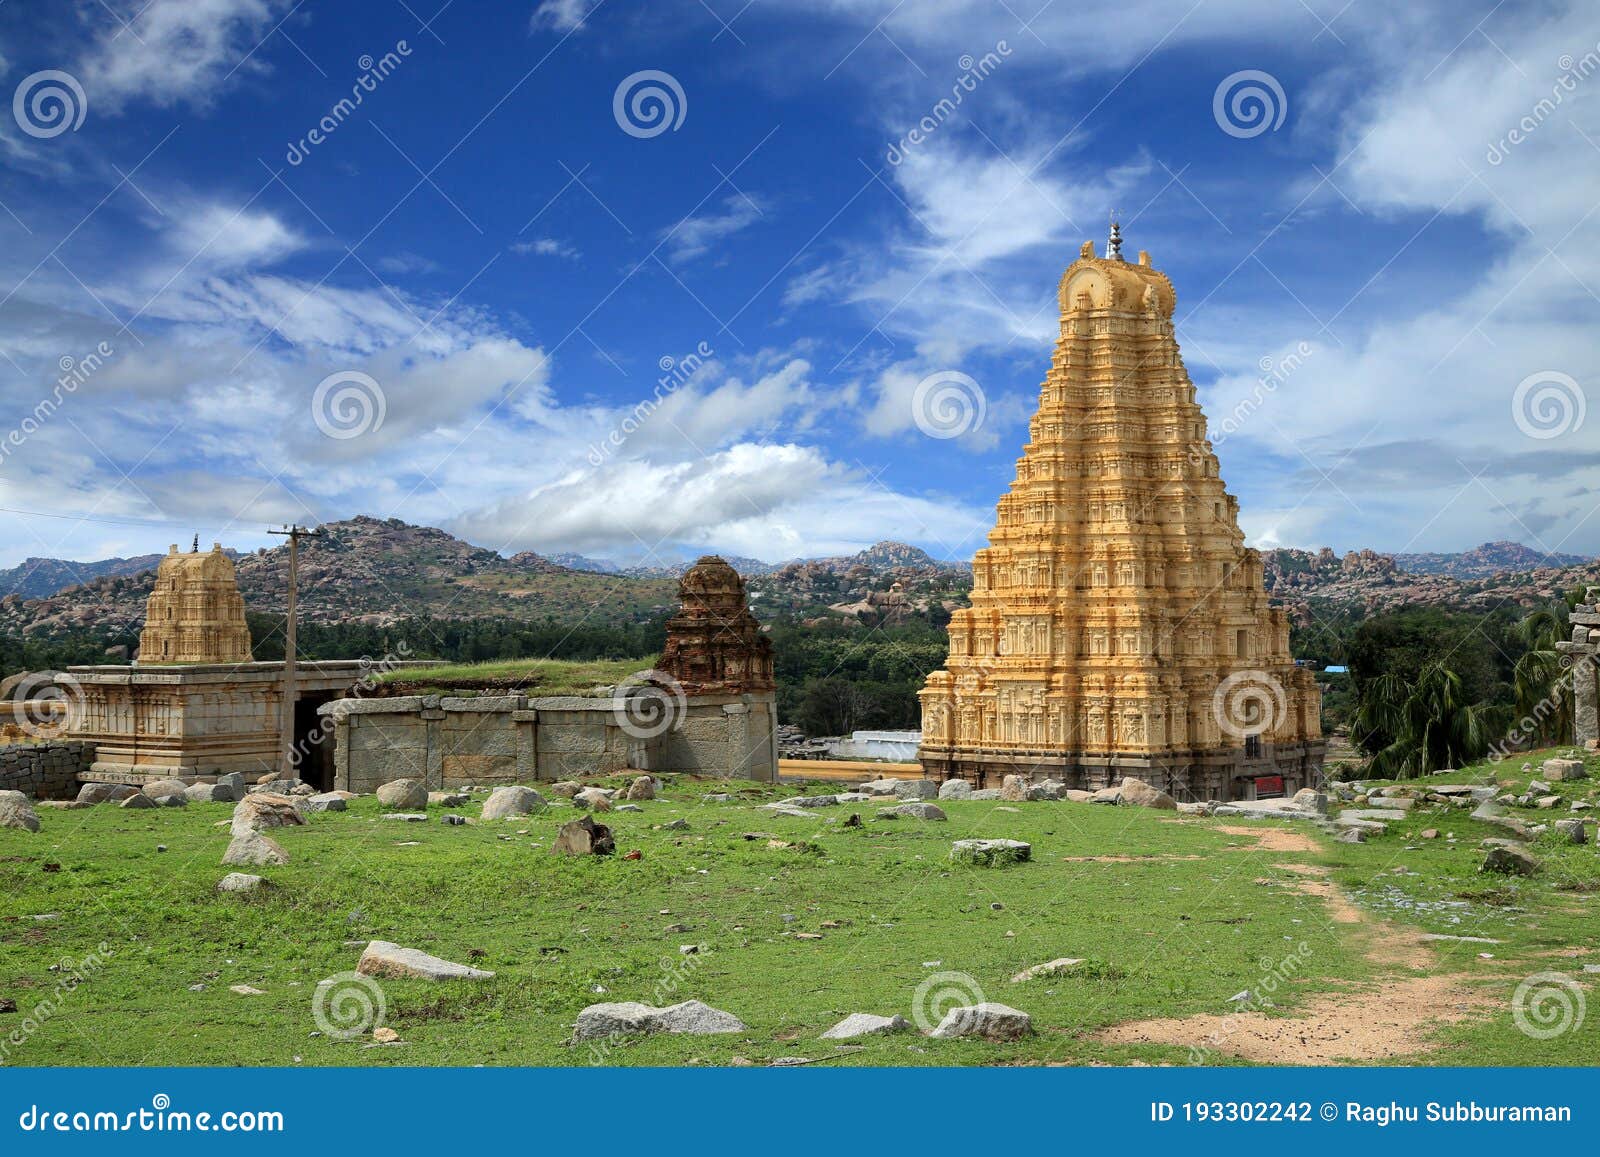 wide view of virupaksha - vijayanagar temple at hampi